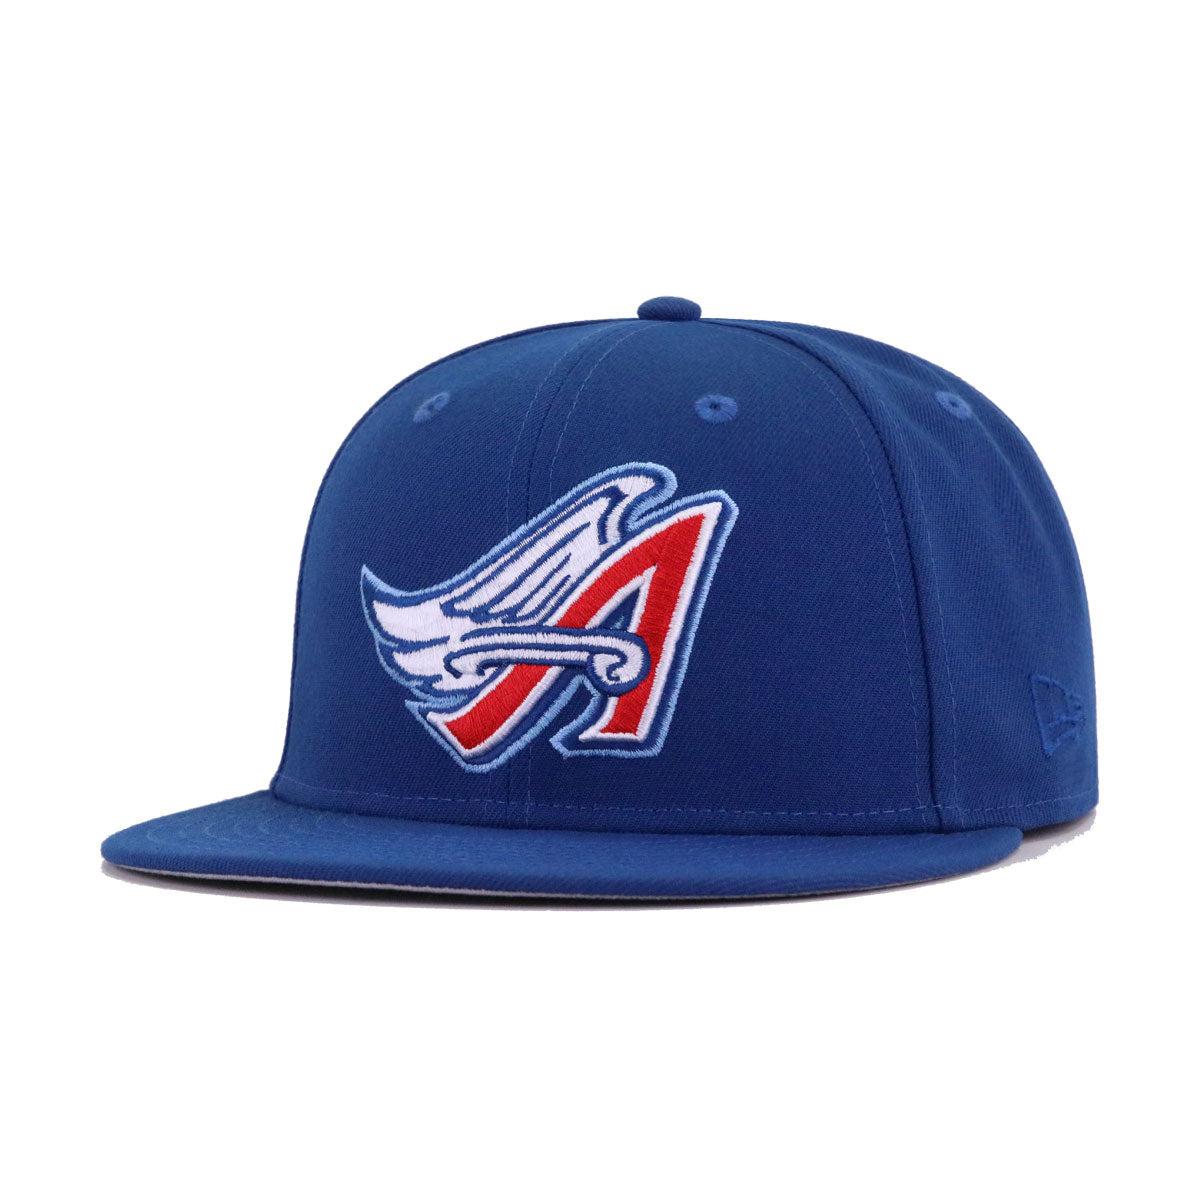 New Era Toronto Blue Jays 40th Anniversary Hat for Sale in Atlanta